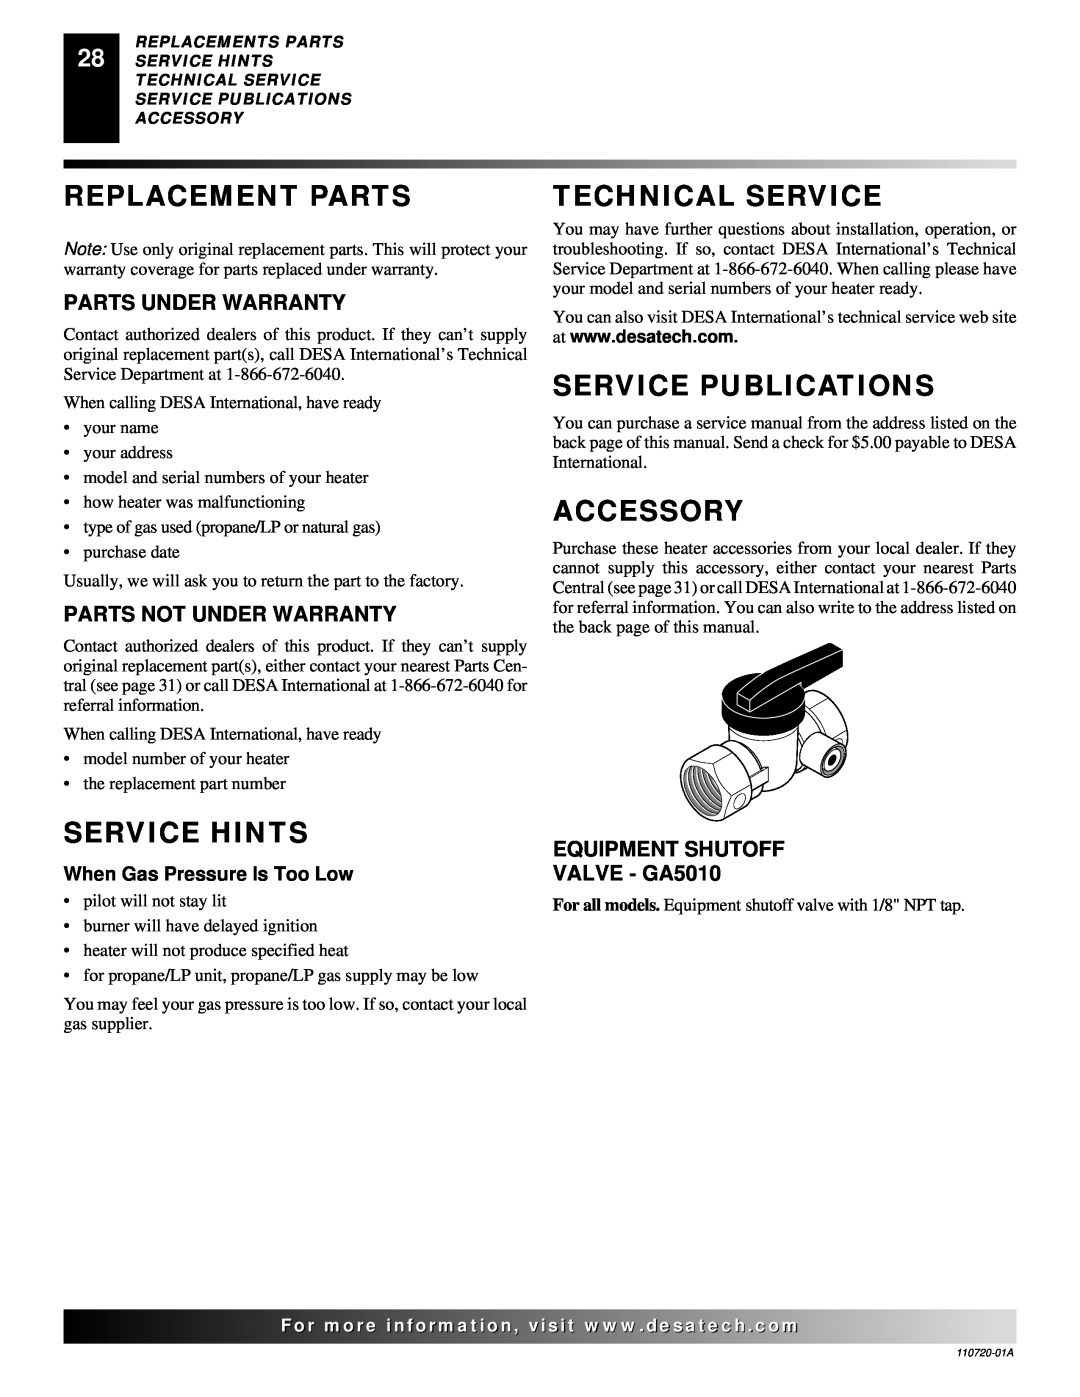 Desa VP1000BTA VN10A, VP10A Replacement Parts, Technical Service, Service Publications, Accessory, Service Hints 